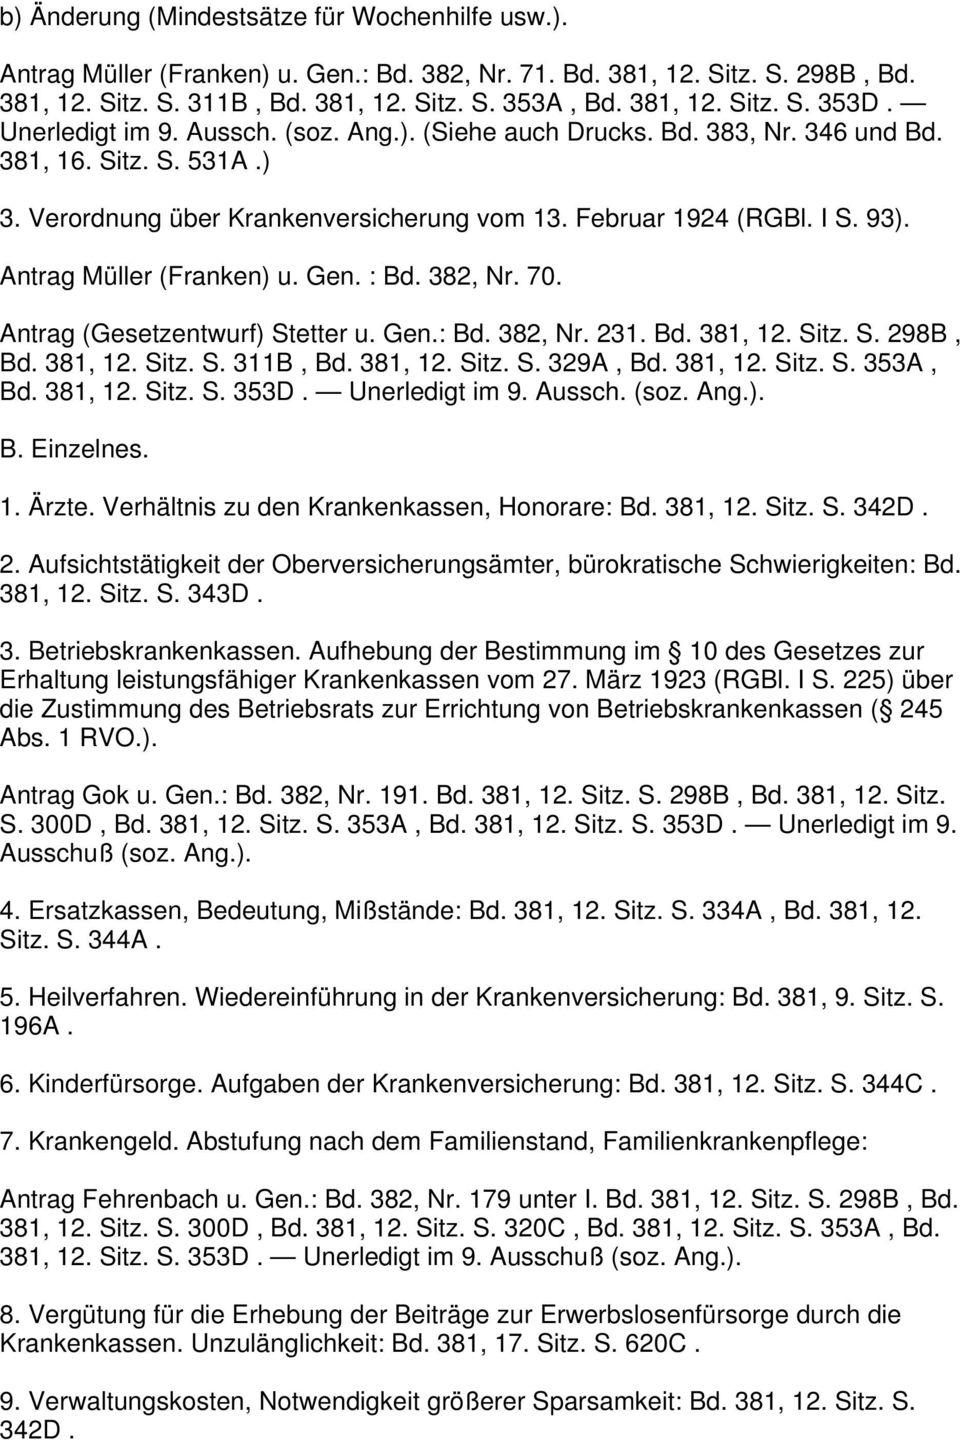 Antrag Müller (Franken) u. Gen. : Bd. 382, Nr. 70. Antrag (Gesetzentwurf) Stetter u. Gen.: Bd. 382, Nr. 231. Bd. 381, 12. Sitz. S. 298B, Bd. 381, 12. Sitz. S. 311B, Bd. 381, 12. Sitz. S. 329A, Bd.